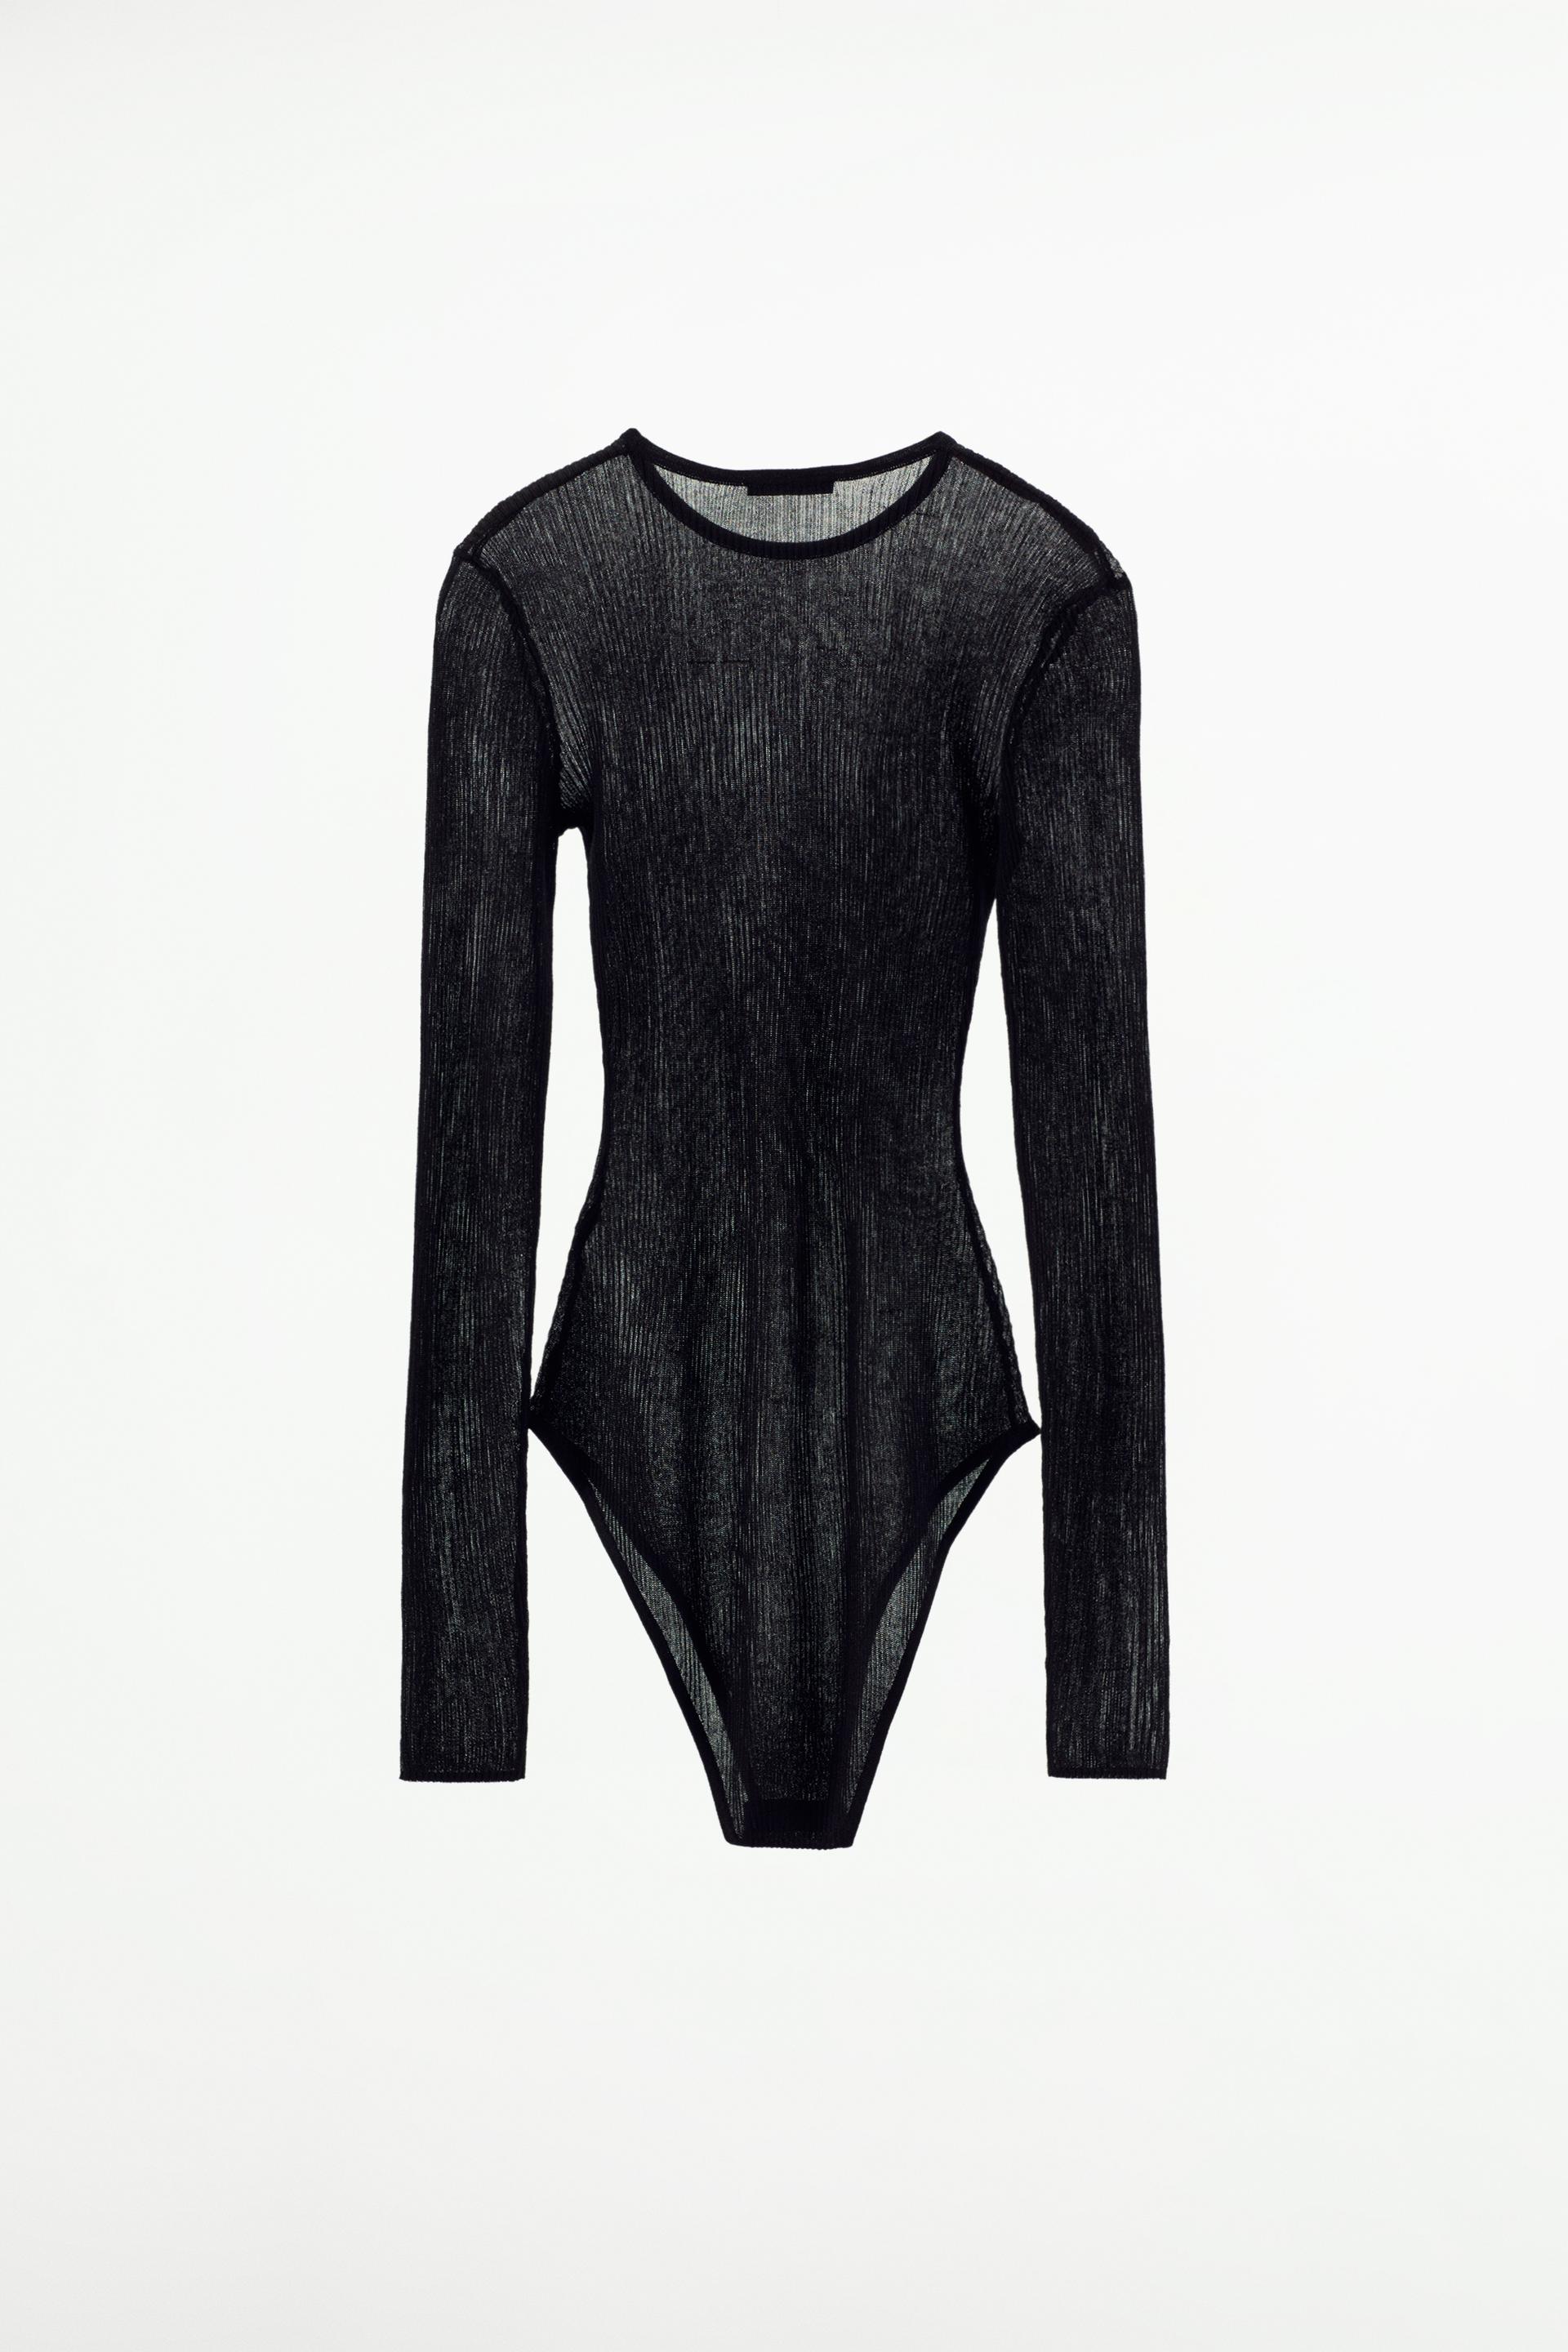 Zara Trafaluc Black Lace Bodysuit V-Neck One-Piece Medium Sheer Lingerie  NWT